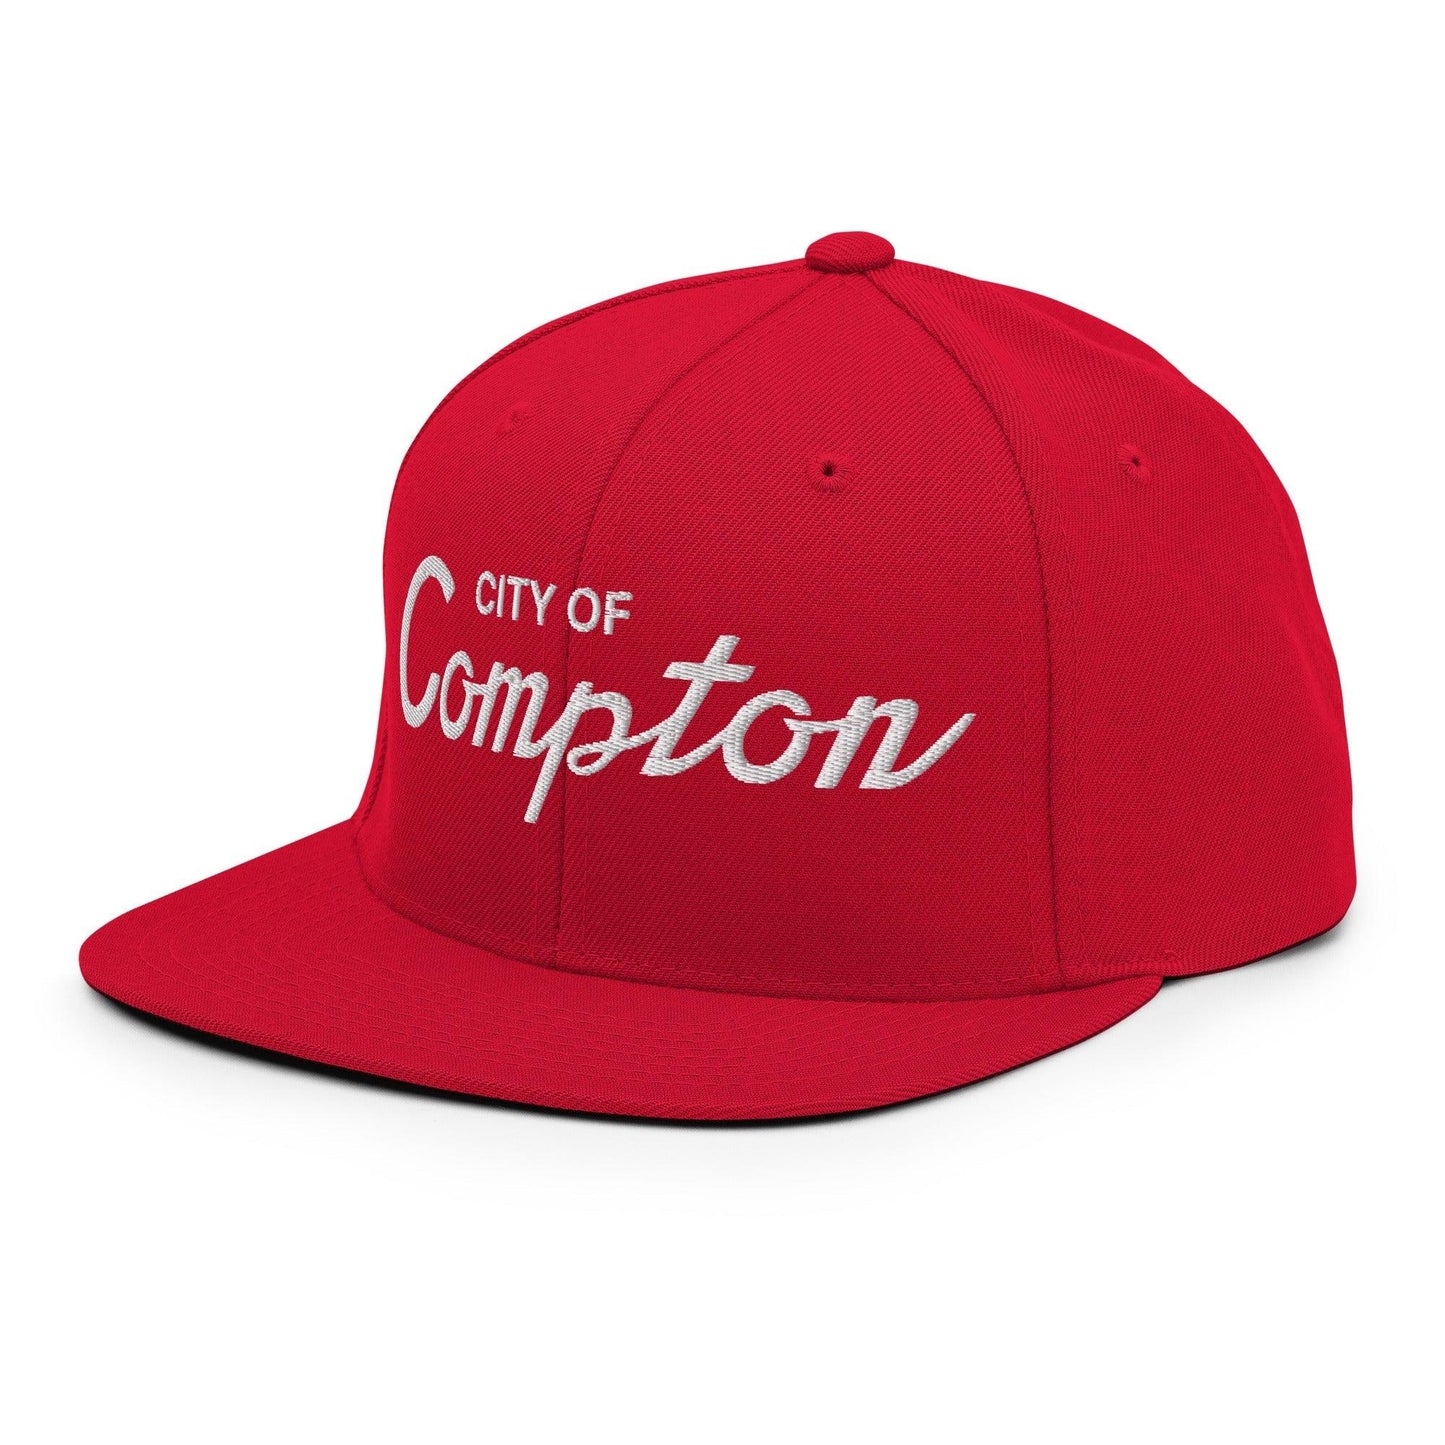 City of Compton II Vintage Sports Script Snapback Hat t Red